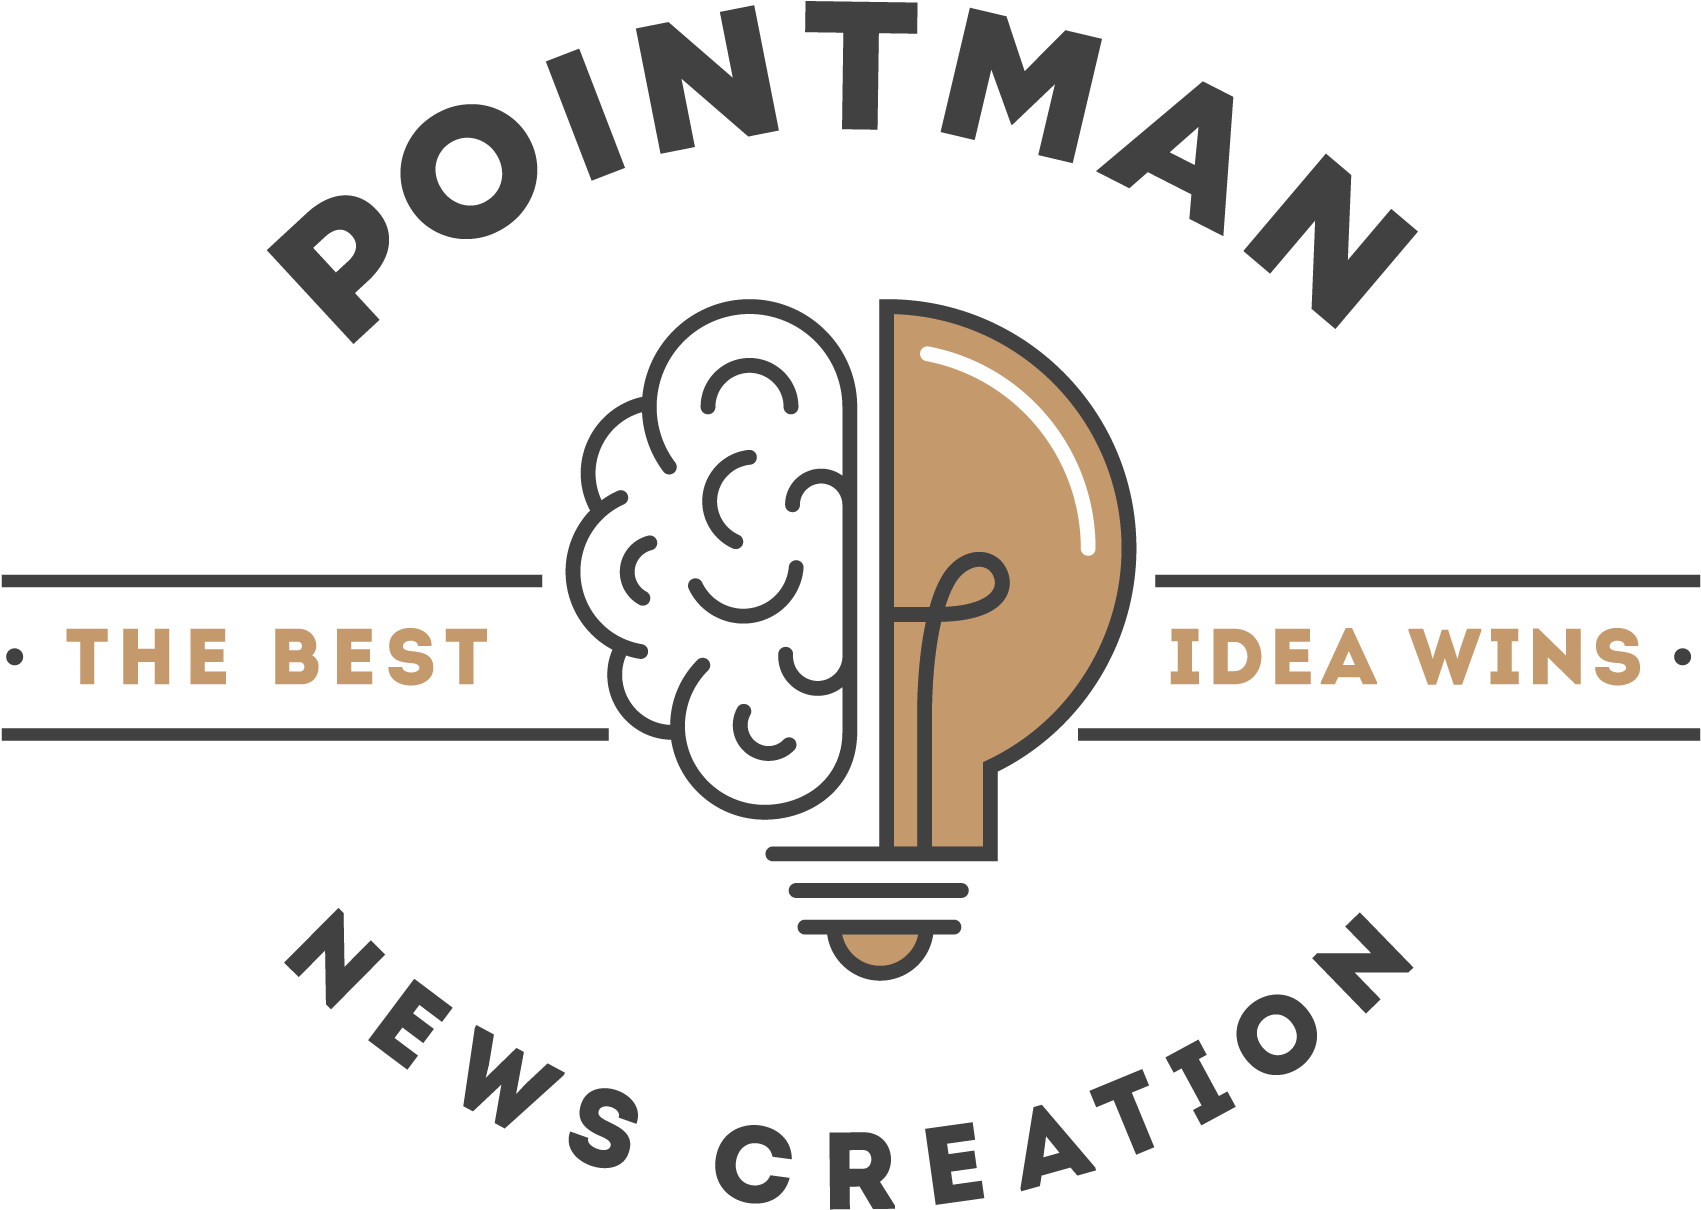 Pointman News Creation Logo